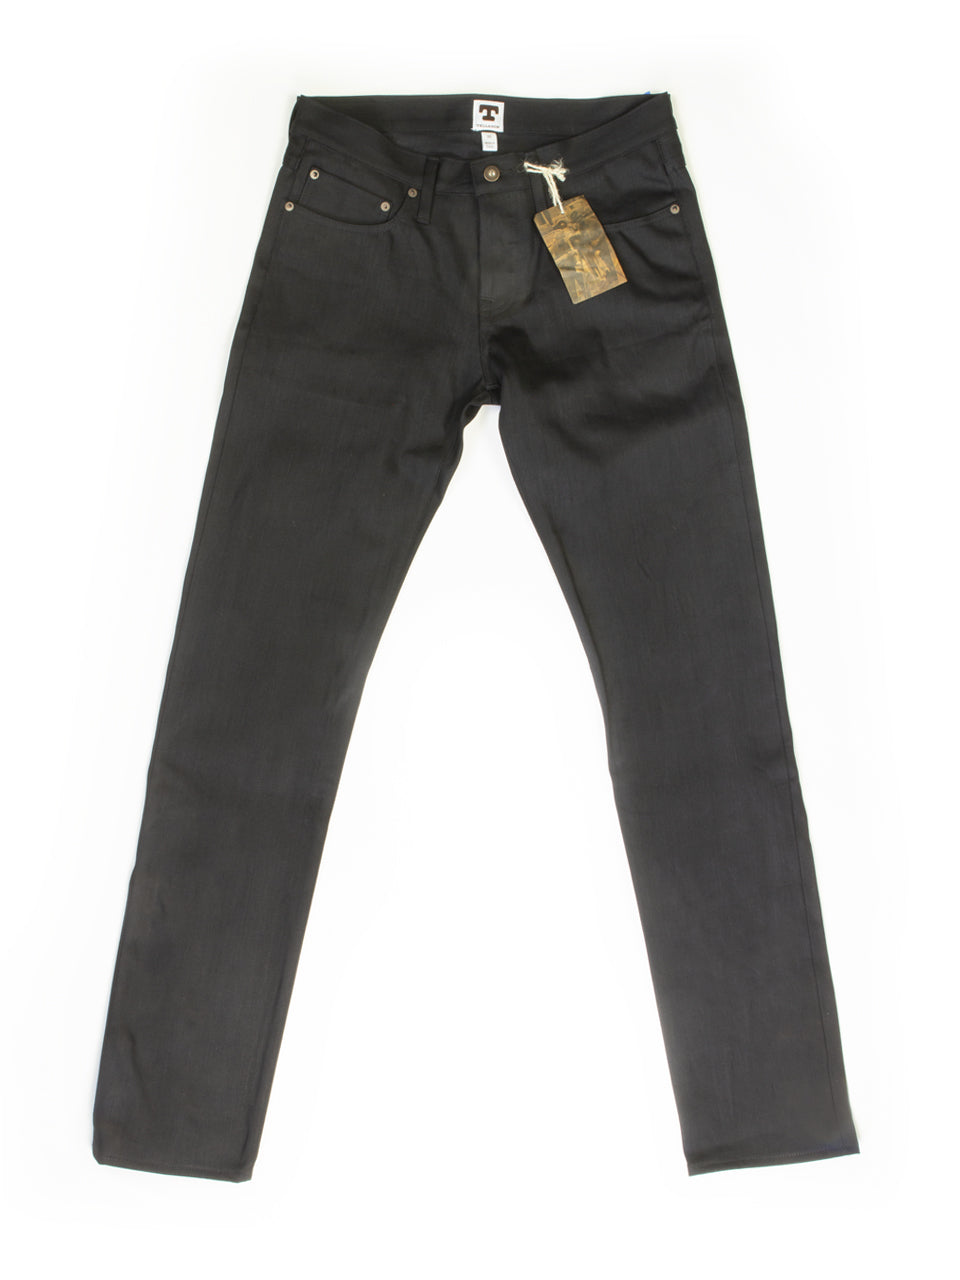 Tellason LADBROKE GROVE Slim Tapered Japanese Black Selvedge Jeans 13.5 oz.